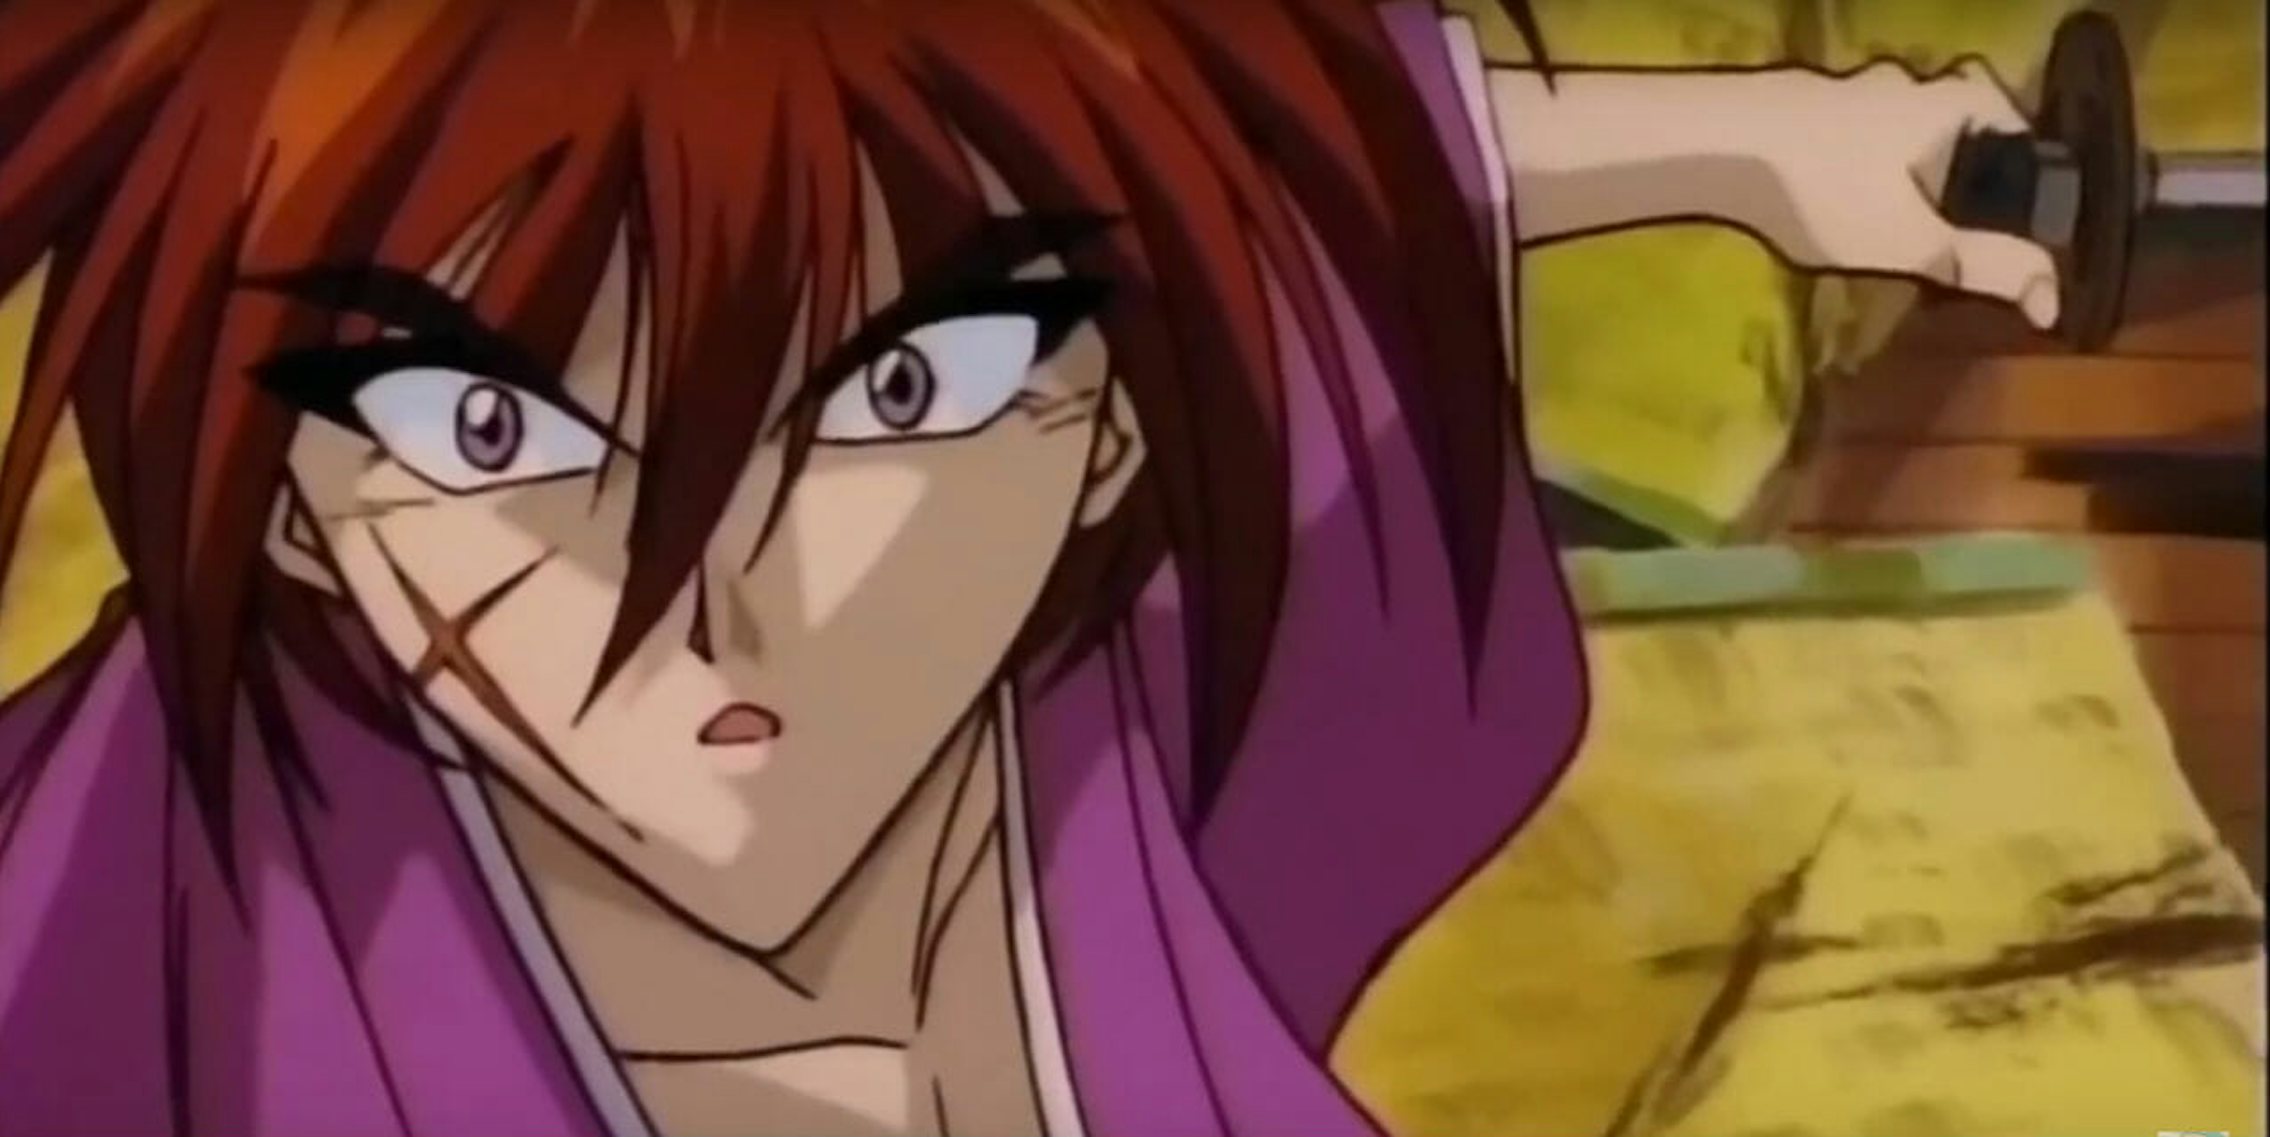 Rurouni Kenshin Cartoon Porn - Manga 'Rurouni Kenshin' to Return After Author Fined for Child Porn